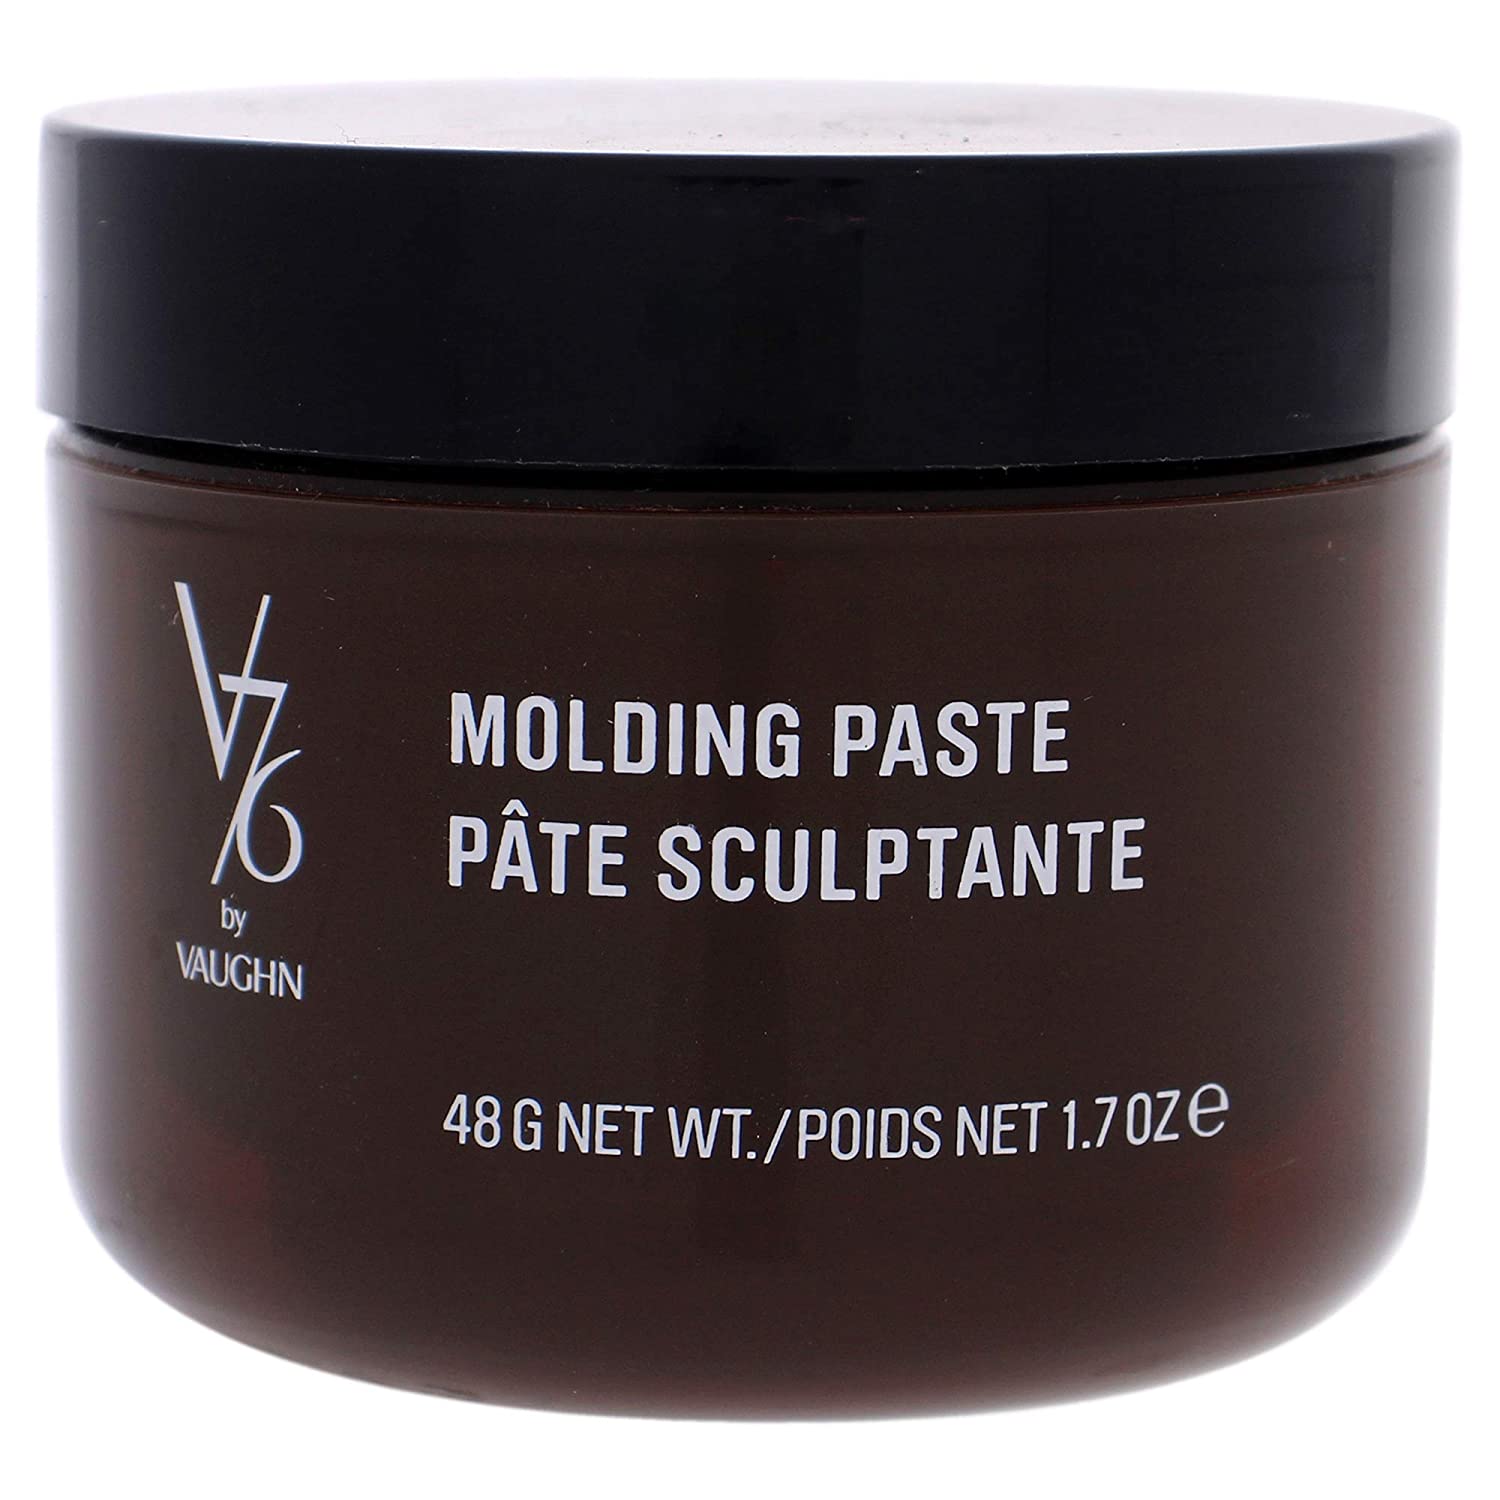 V76 by Vaughn molding paste